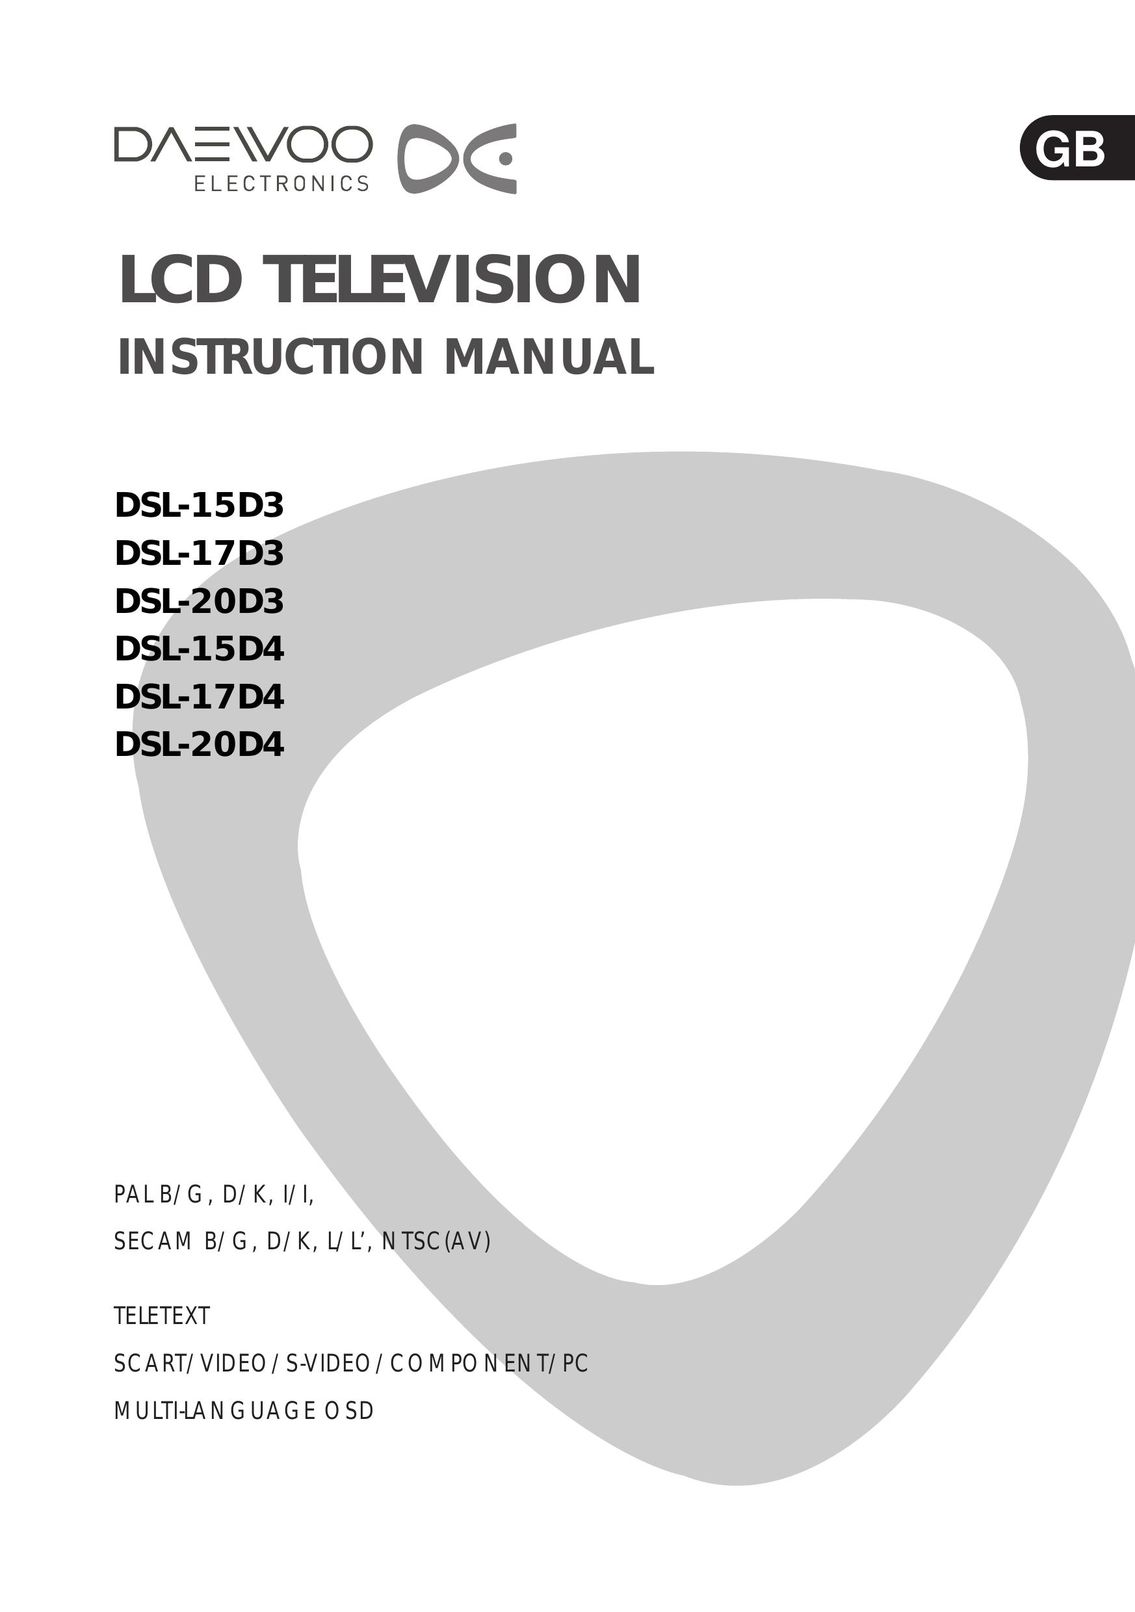 Daewoo DSL-15D4 Flat Panel Television User Manual